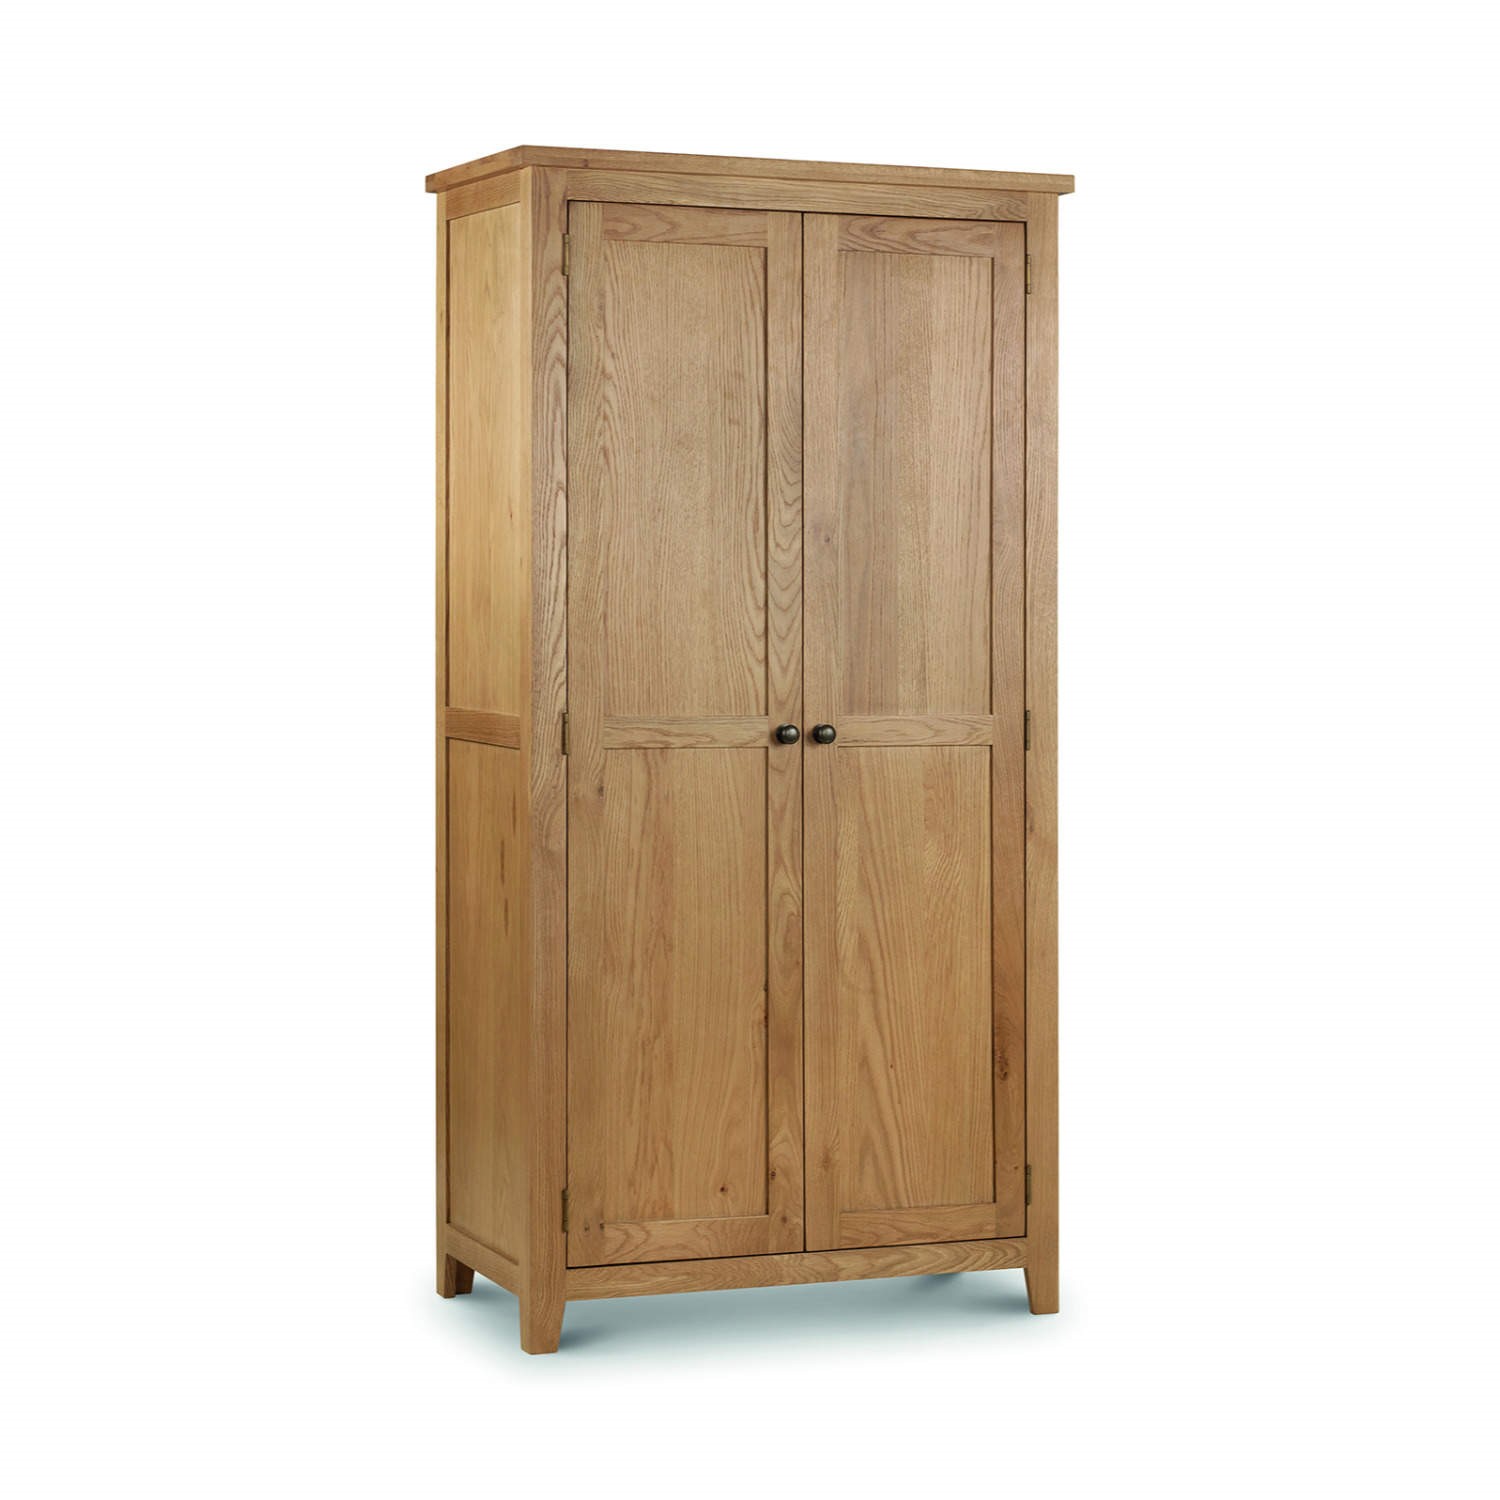 Photo of Solid oak 2 door double wardrobe - marlborough - julian bowen